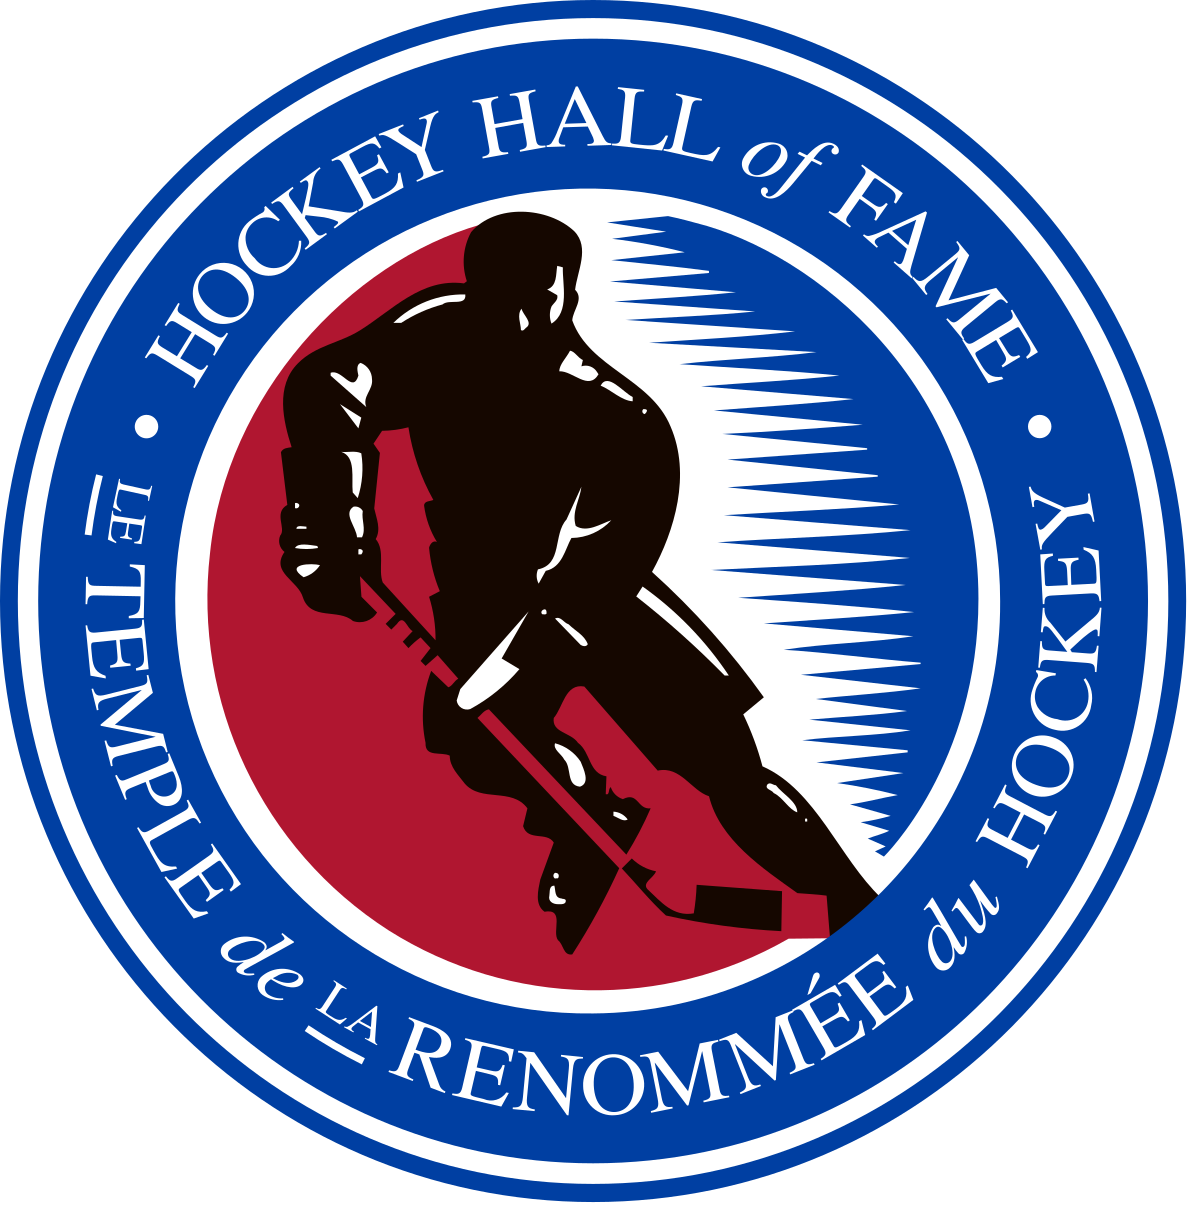 Hockey-Hall-of-Fame